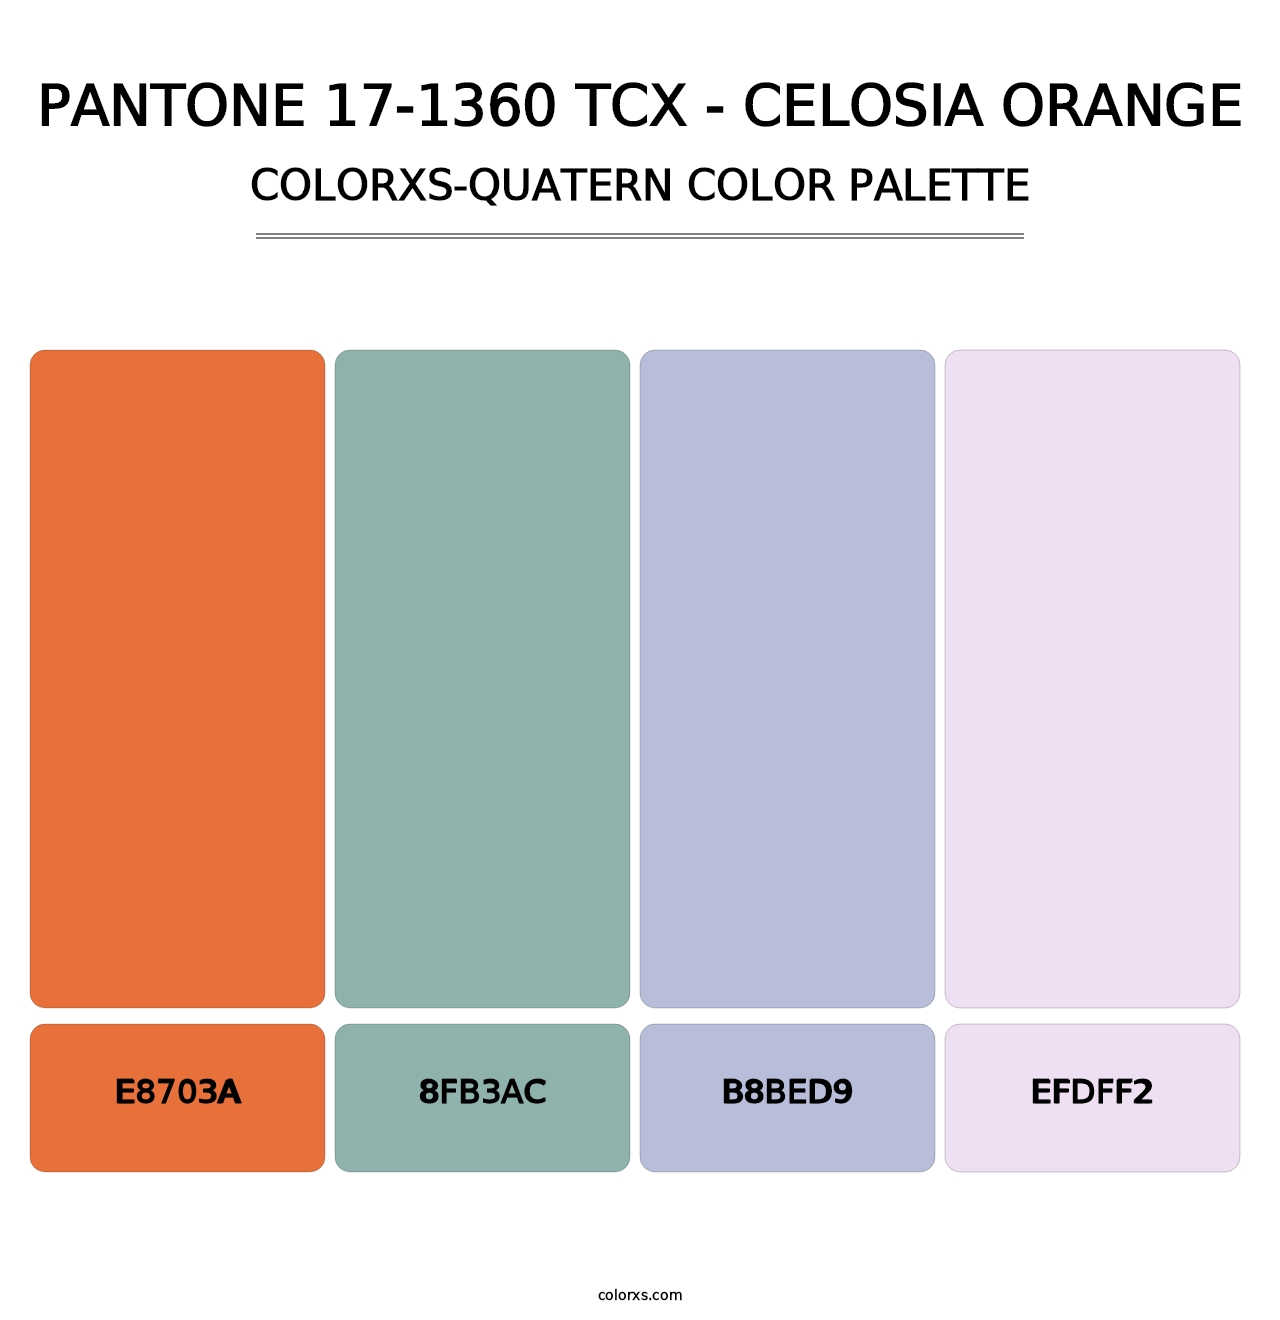 PANTONE 17-1360 TCX - Celosia Orange - Colorxs Quatern Palette